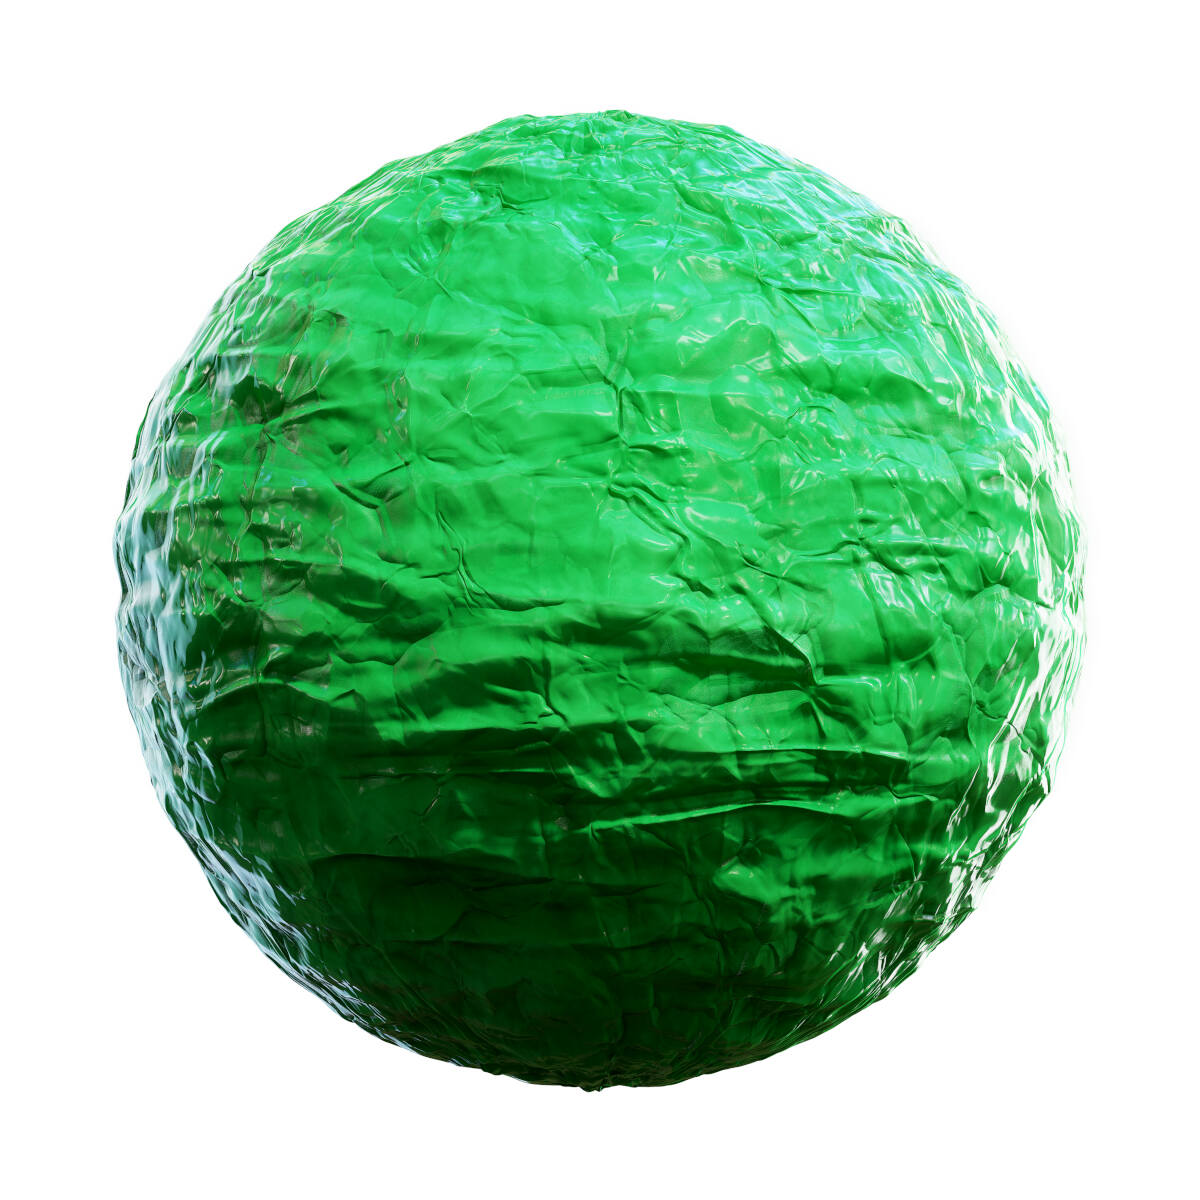 Green Wrinkled Foil PBR Texture